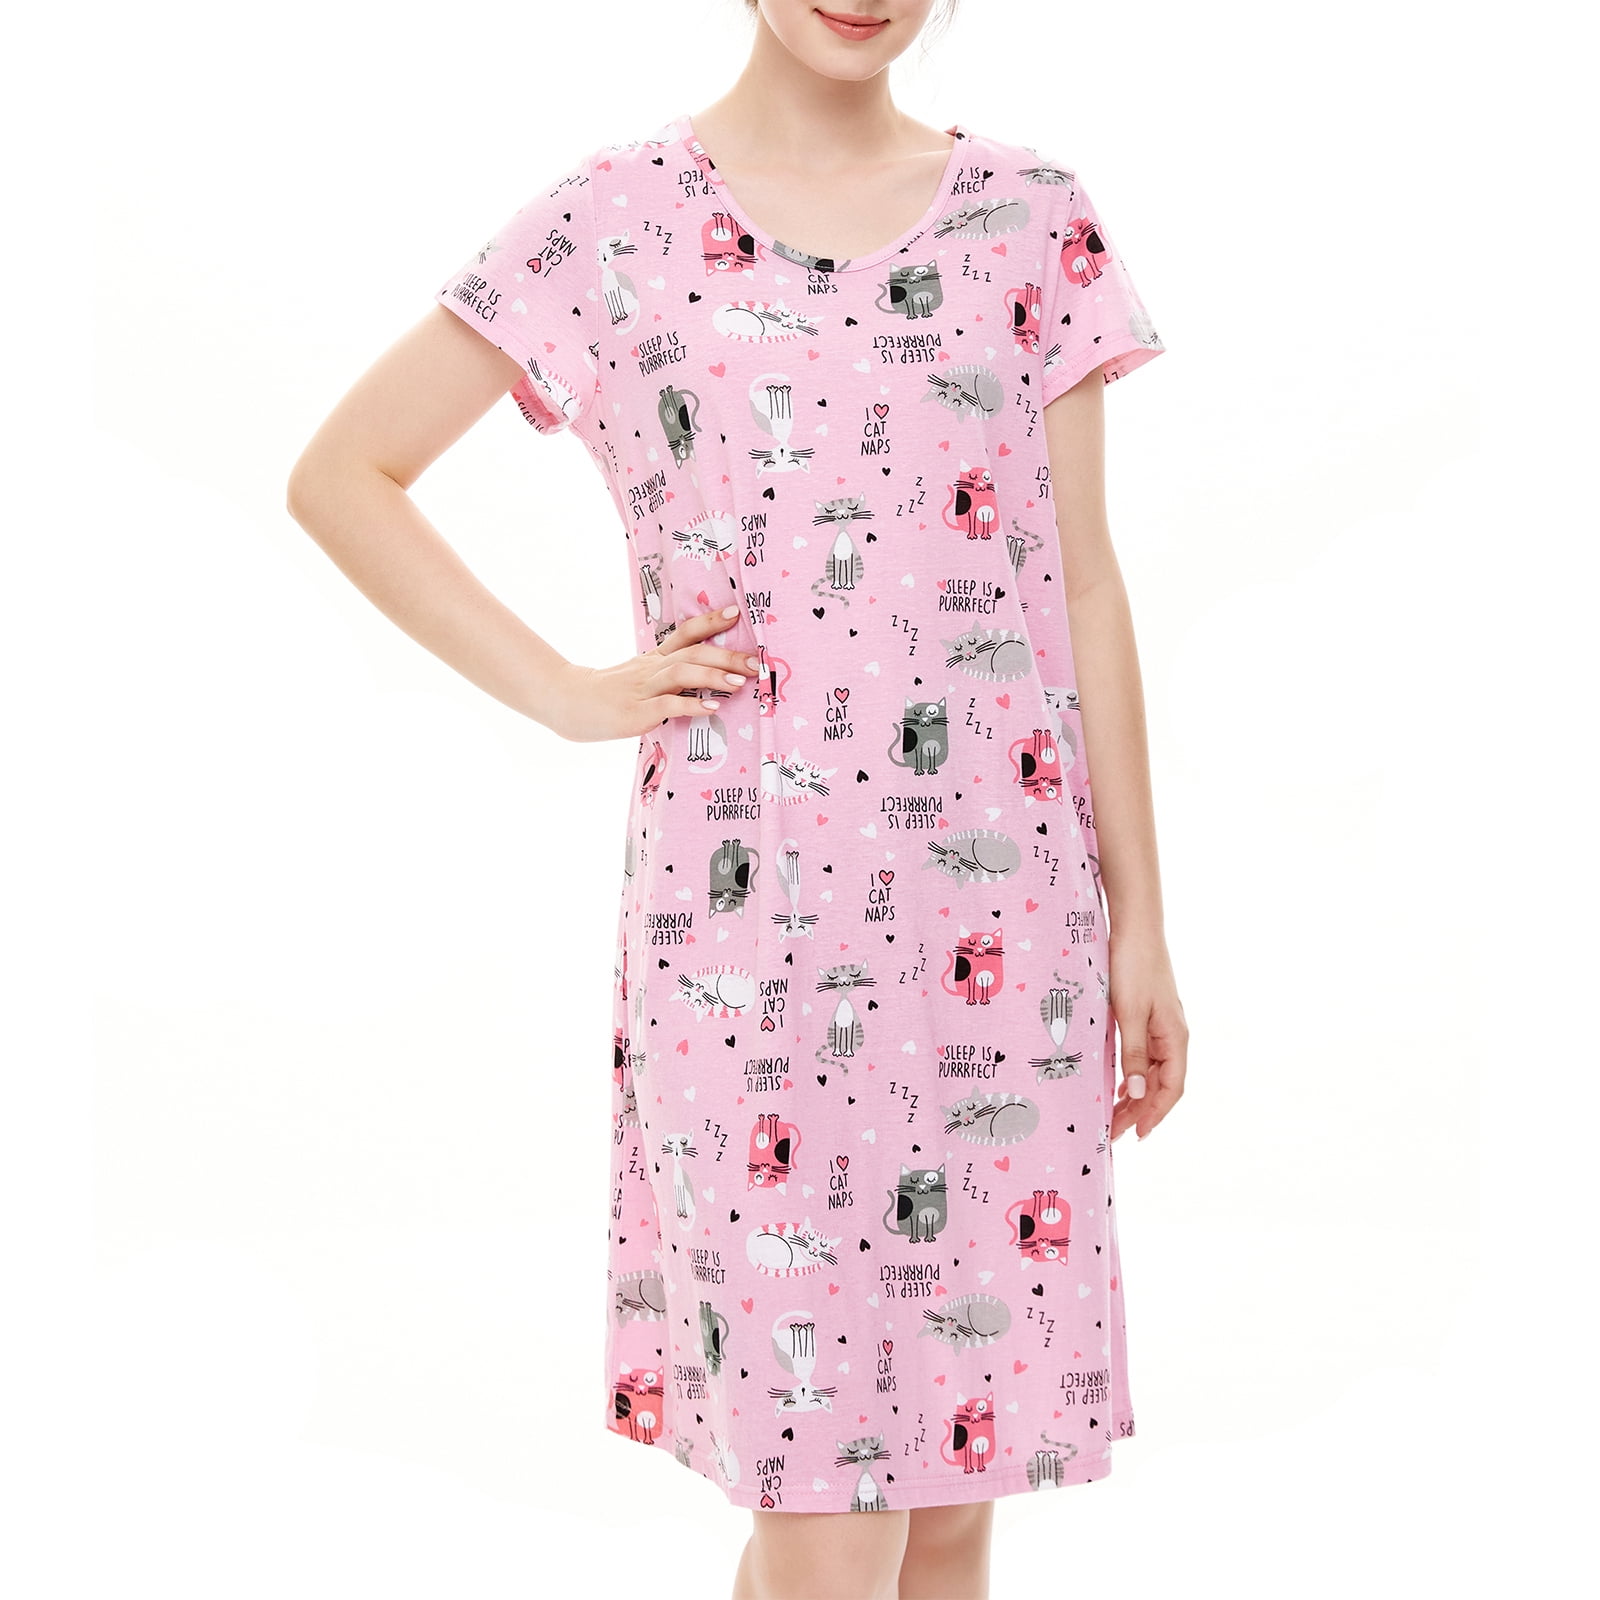 Cotton Juniors Size M Gowns for Women for sale | eBay-hkpdtq2012.edu.vn